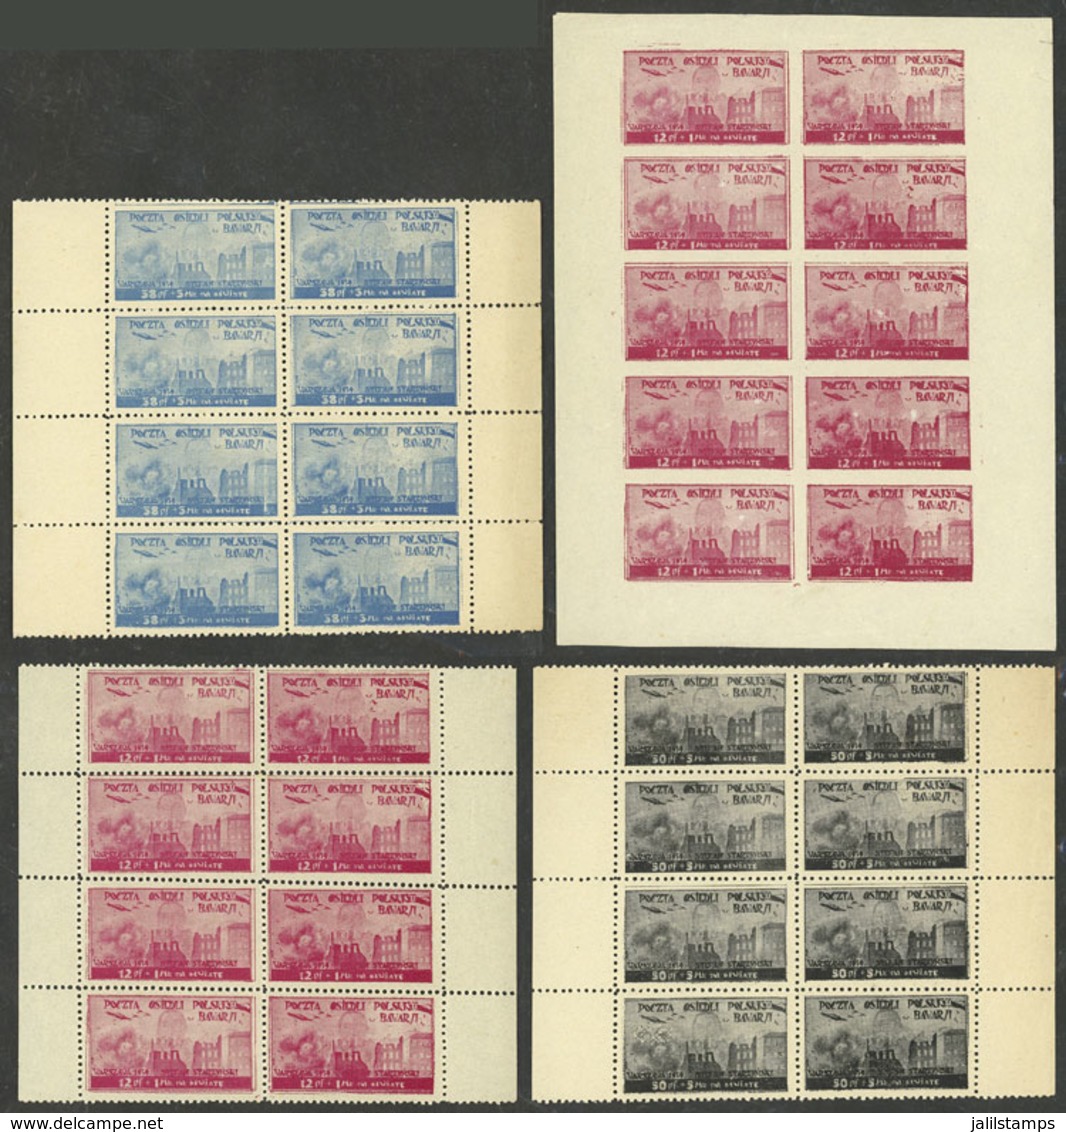 POLAND: Interesting Lot Of Stamps Of The Year 1939 "Stefan Tarzinski", Interesting!" - Sammlungen